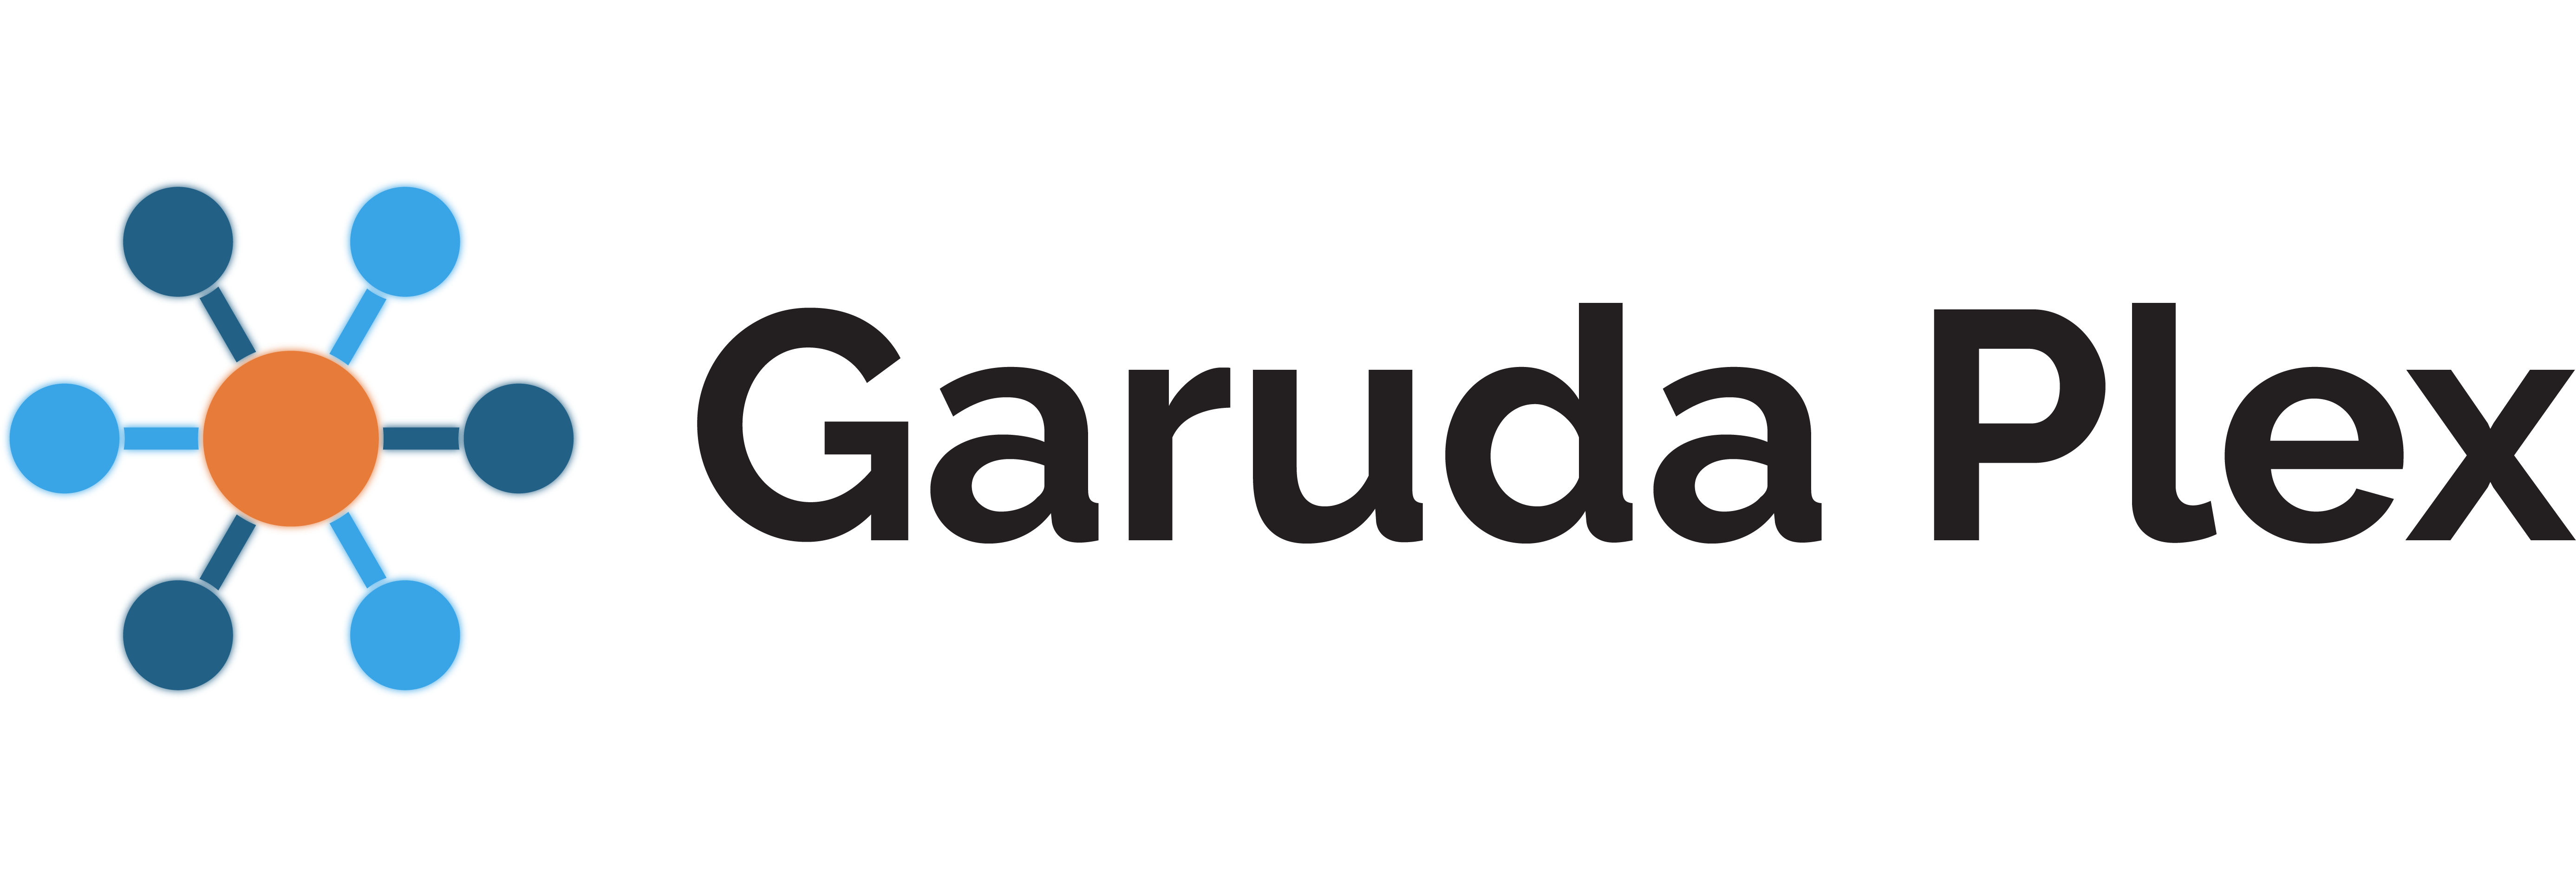 Garuda Plex